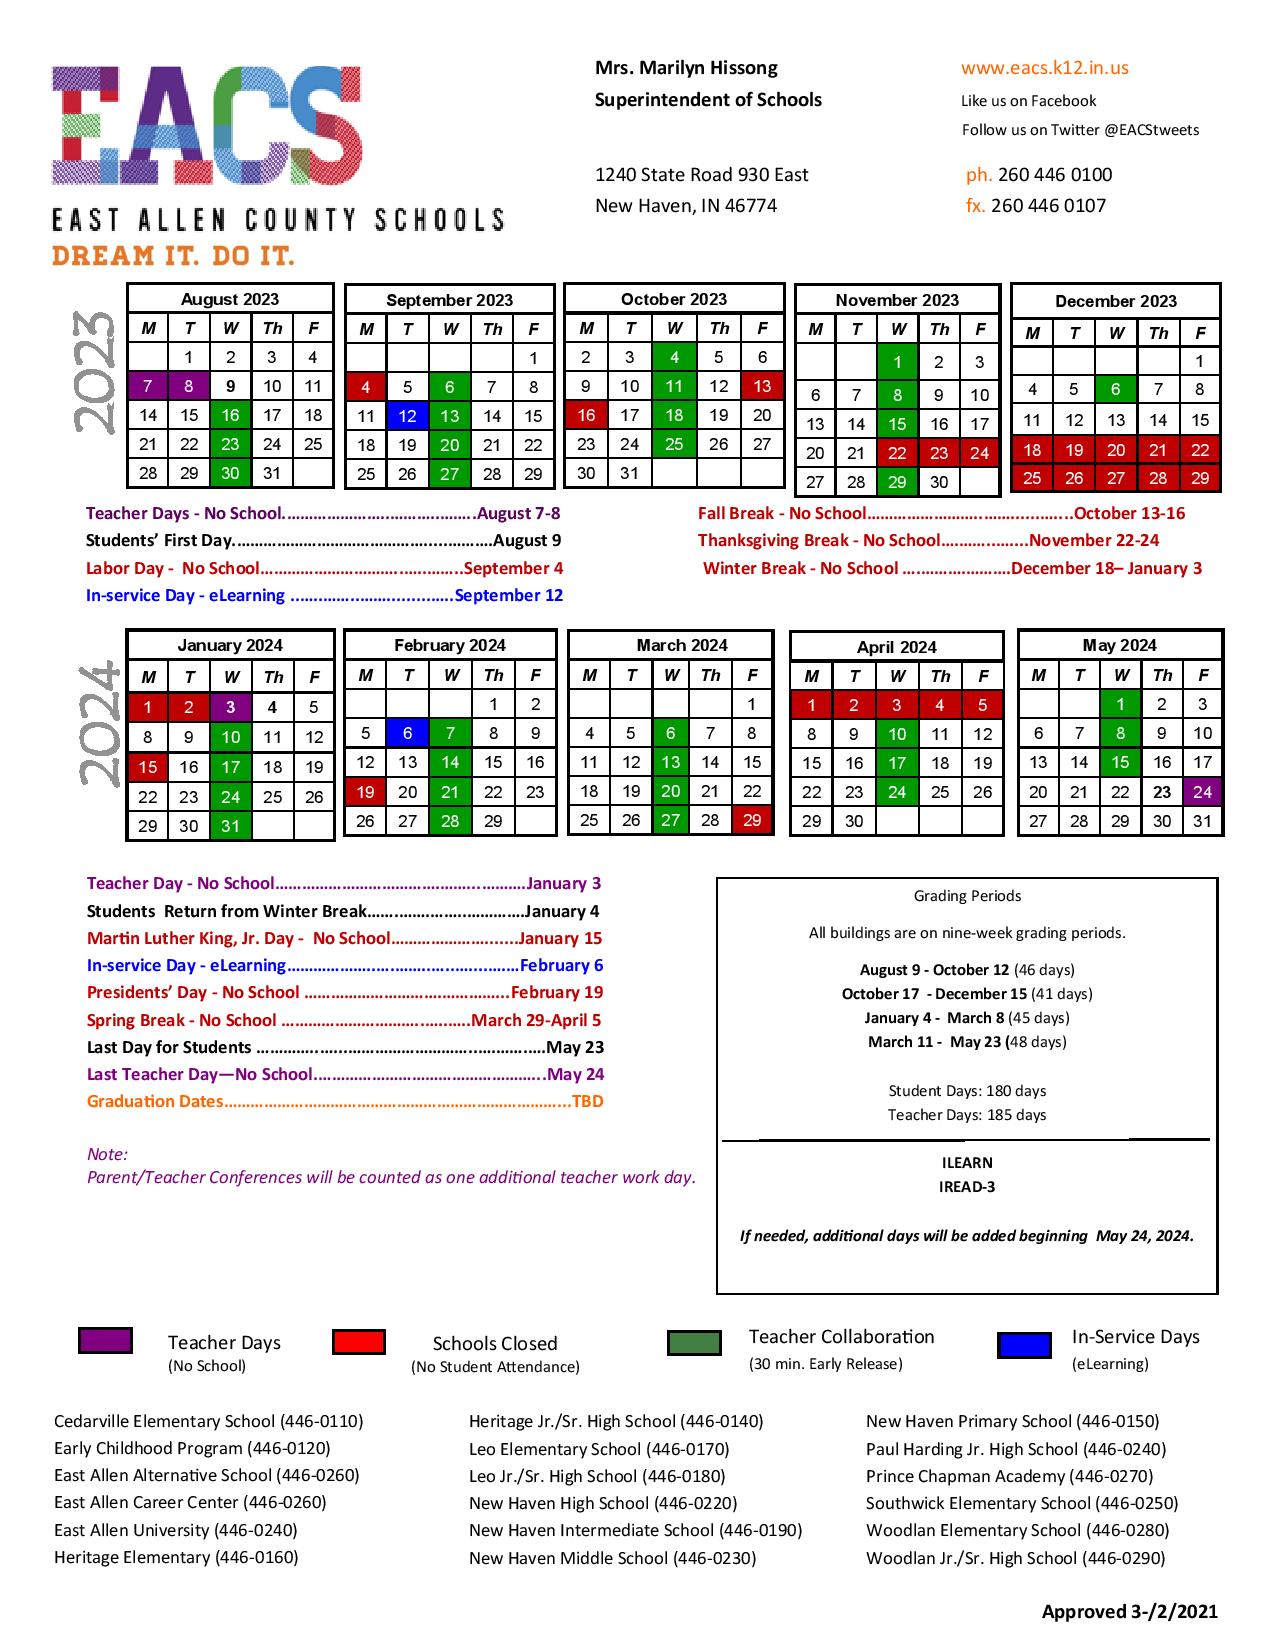 academic-calendars-2025-2026-free-printable-word-templates